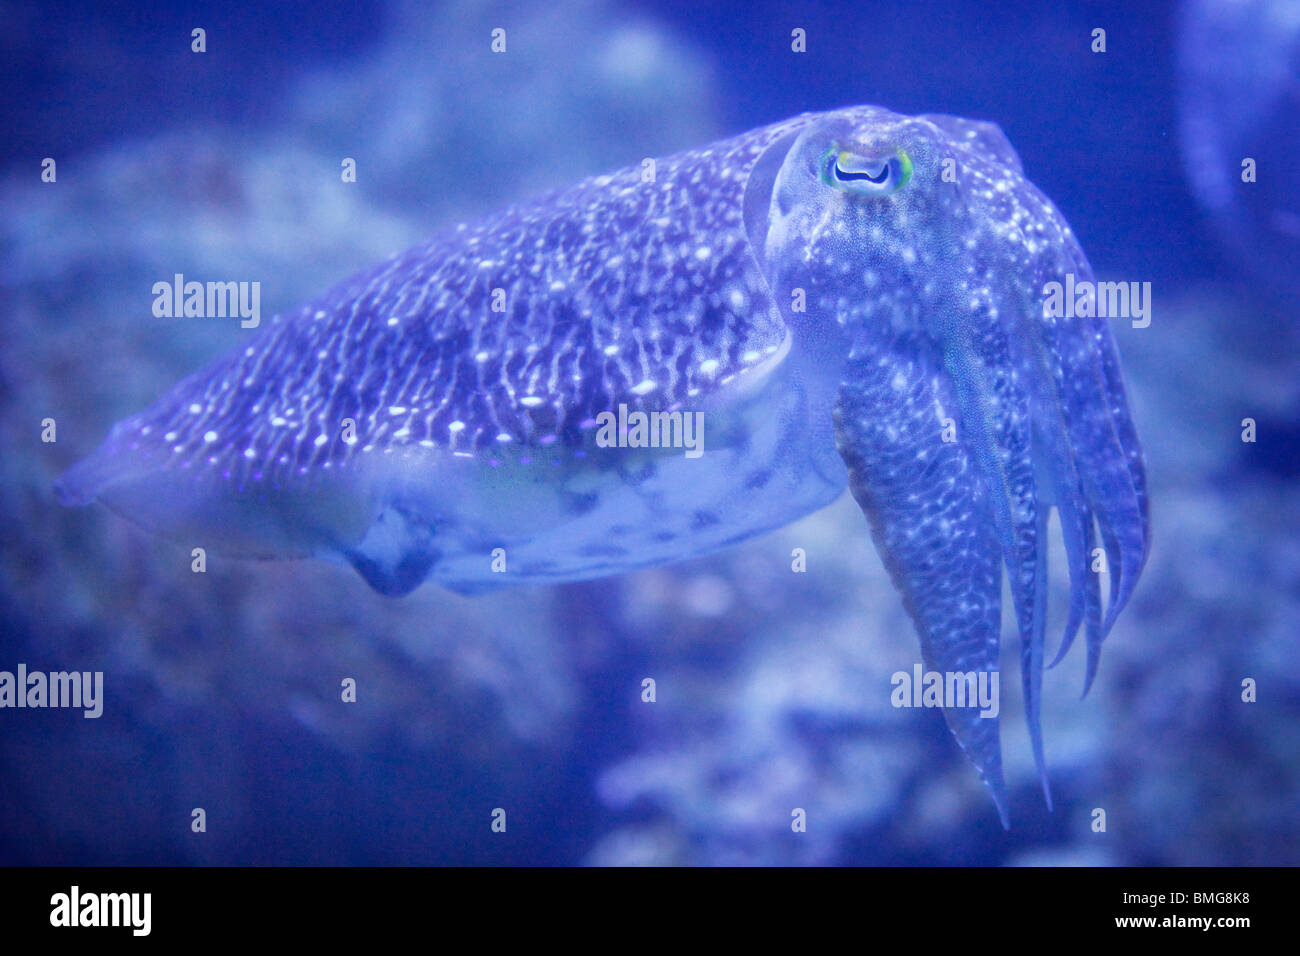 Portrait of an unusual sea creature Stock Photo